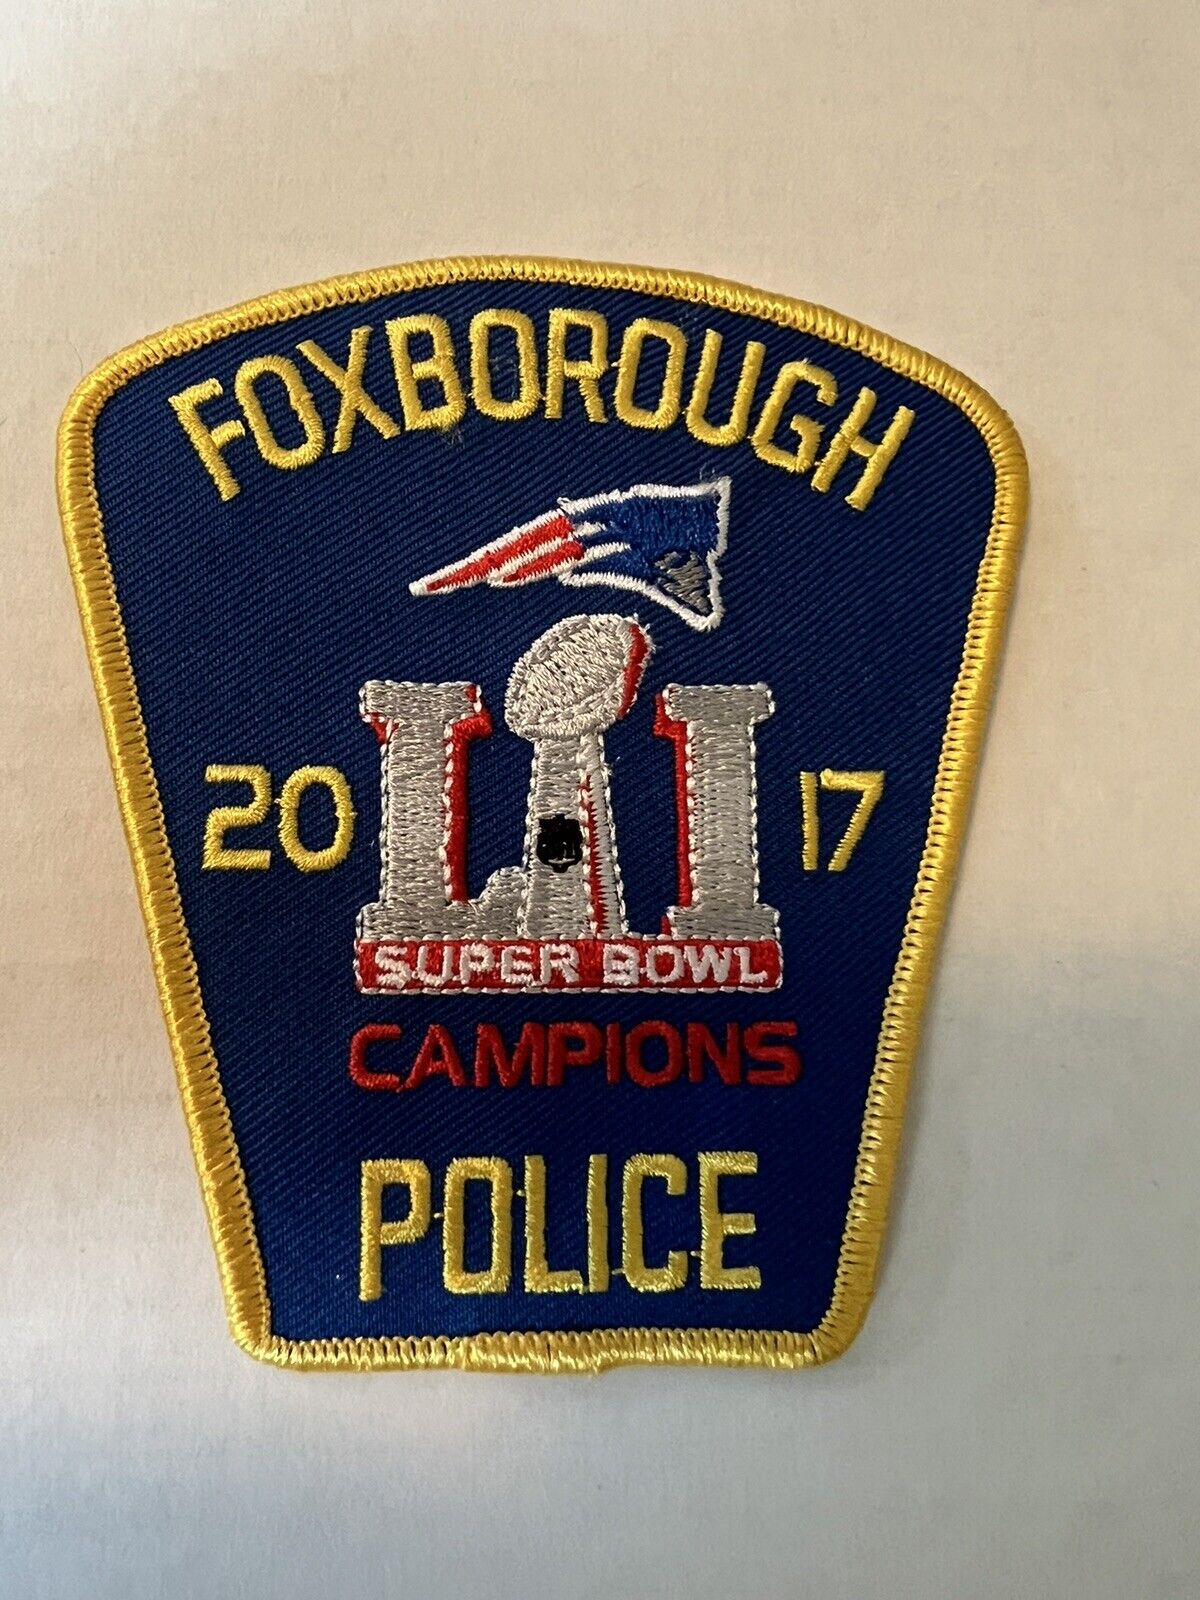 Foxborough Police New England Patriots Commemorative Patch 2017